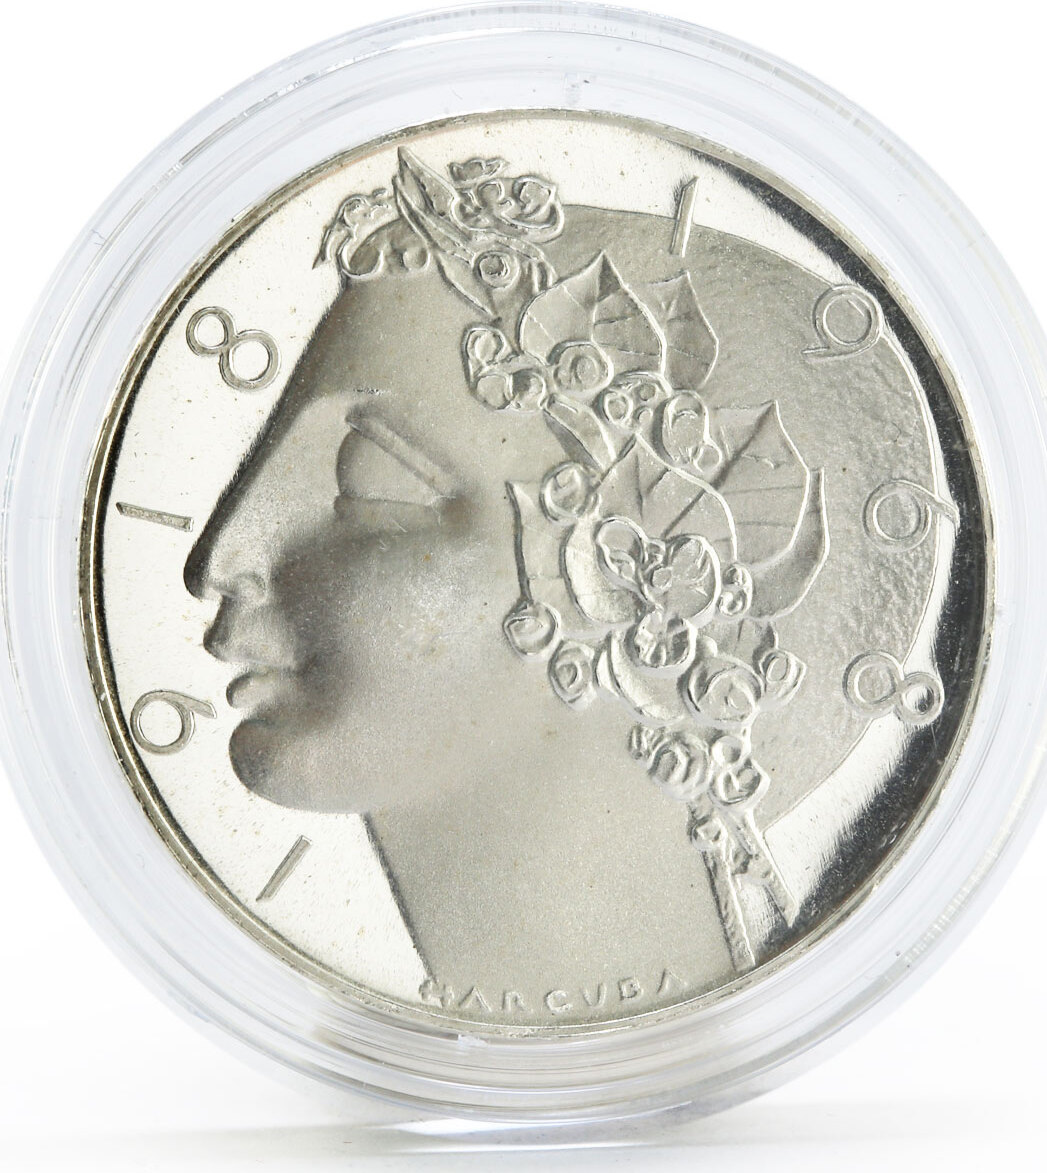 Czech Republic Czechoslovakia 50 korun 50th Anniversary of Independence proof silver coin 1968